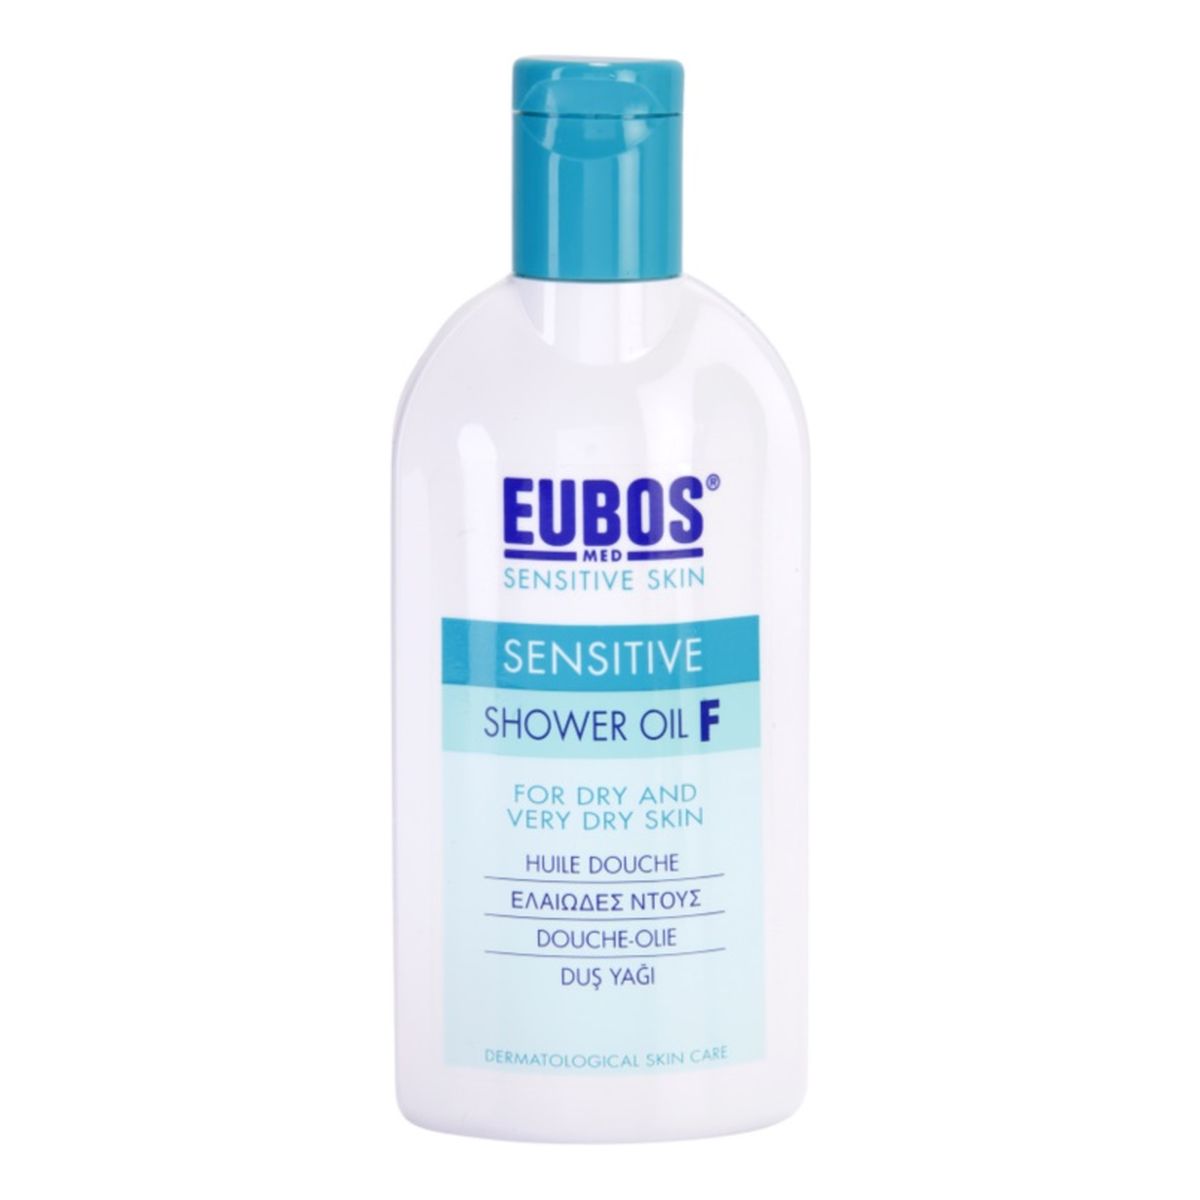 Eubos-Med Sensitive olejek pod prysznic do skóry suchej i bardzo suchej 200ml